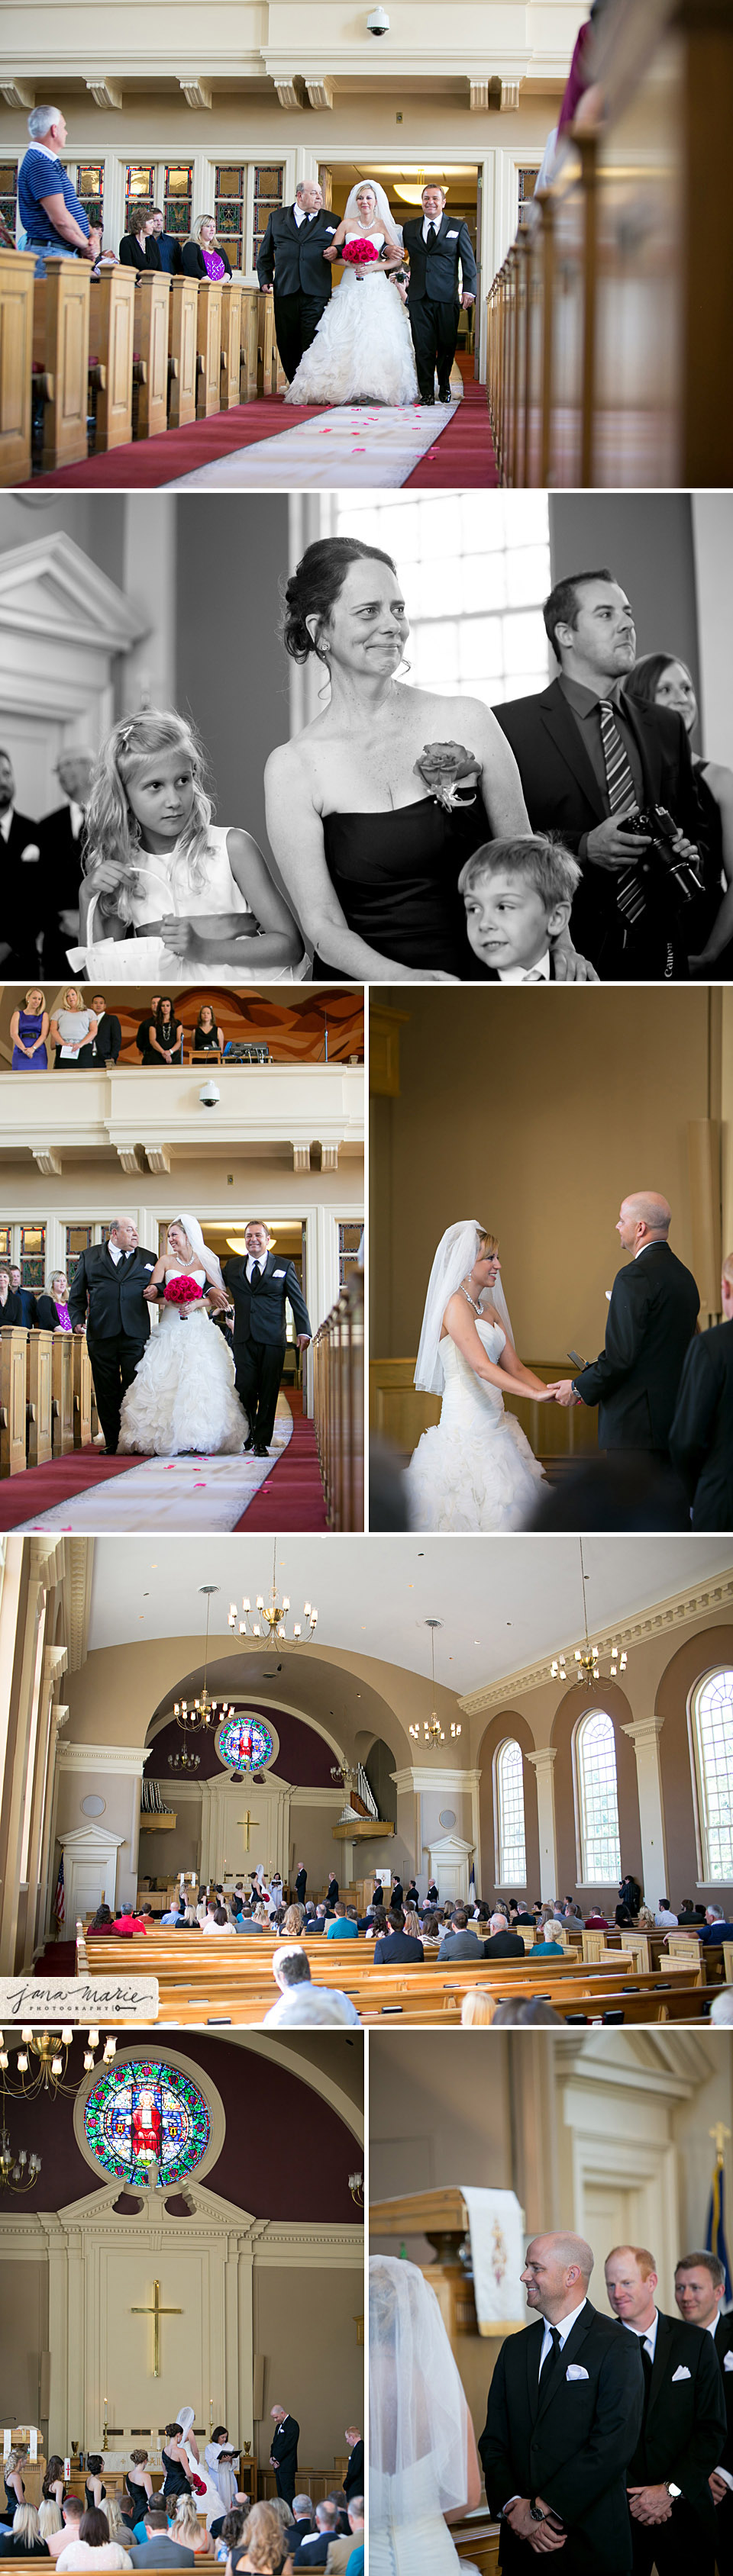 Kansas City weddings, best photographers, bride and groom, church weddings